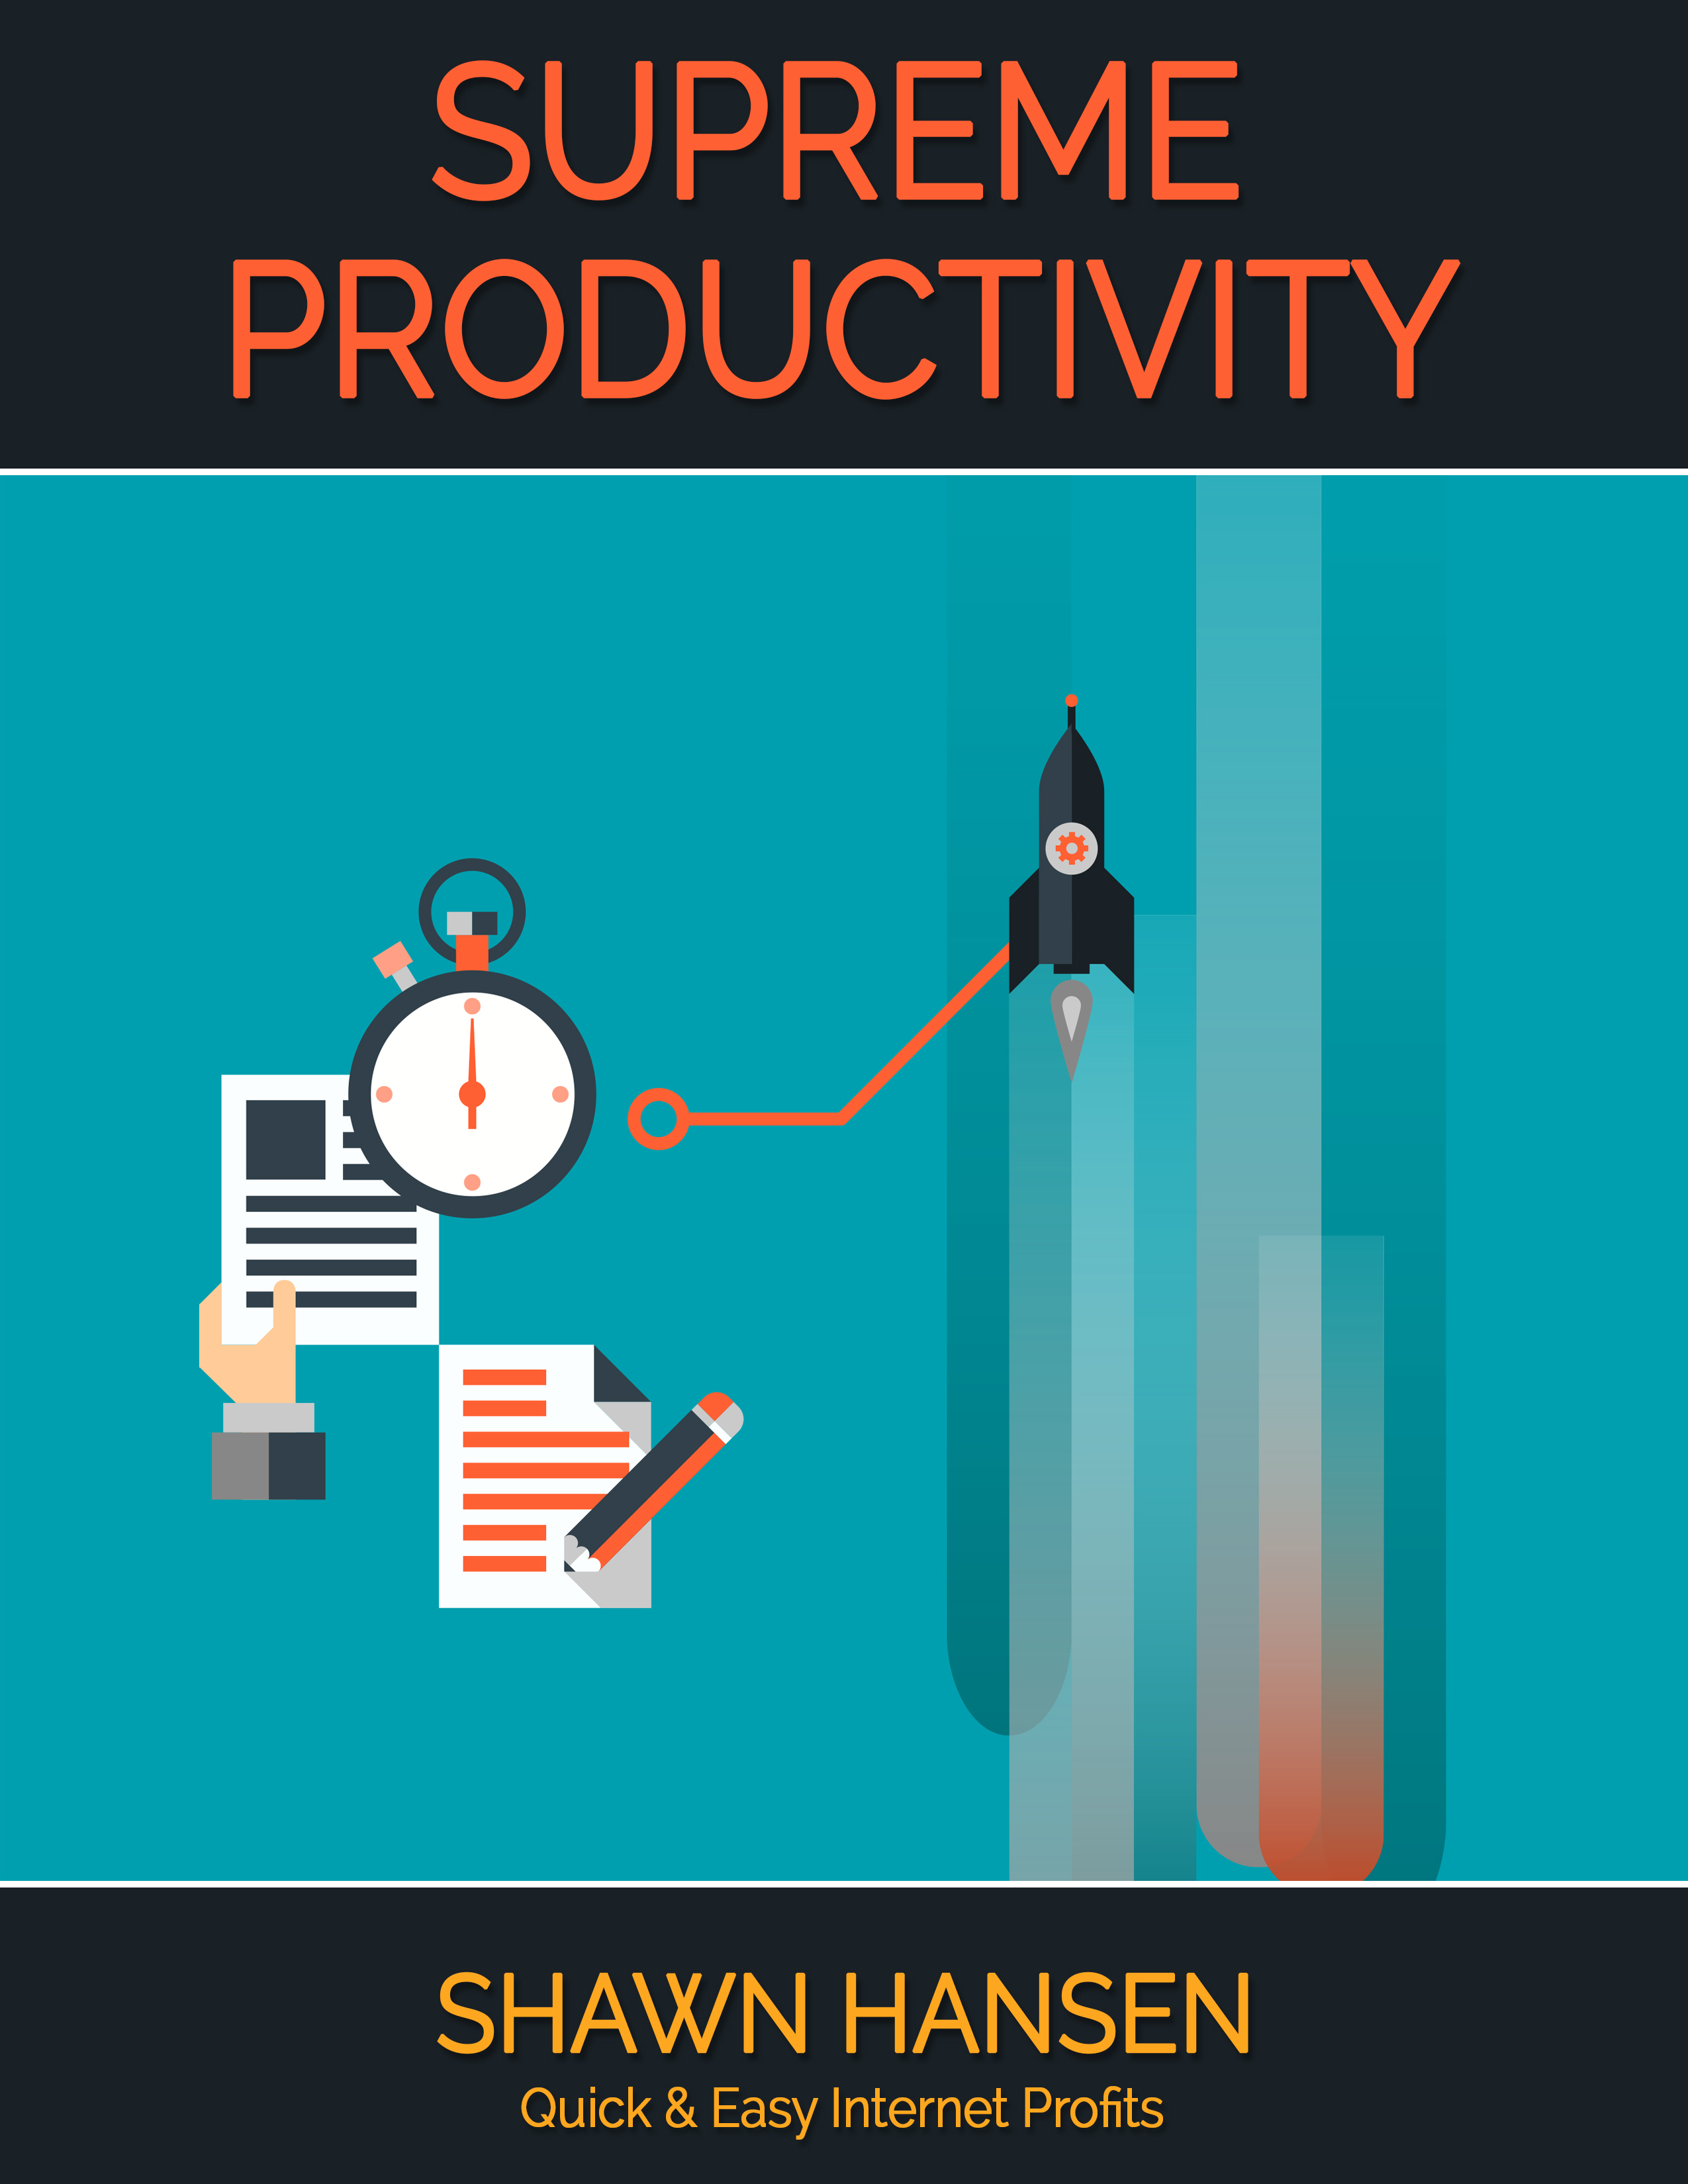 Supreme Productivity by Shawn Hansen